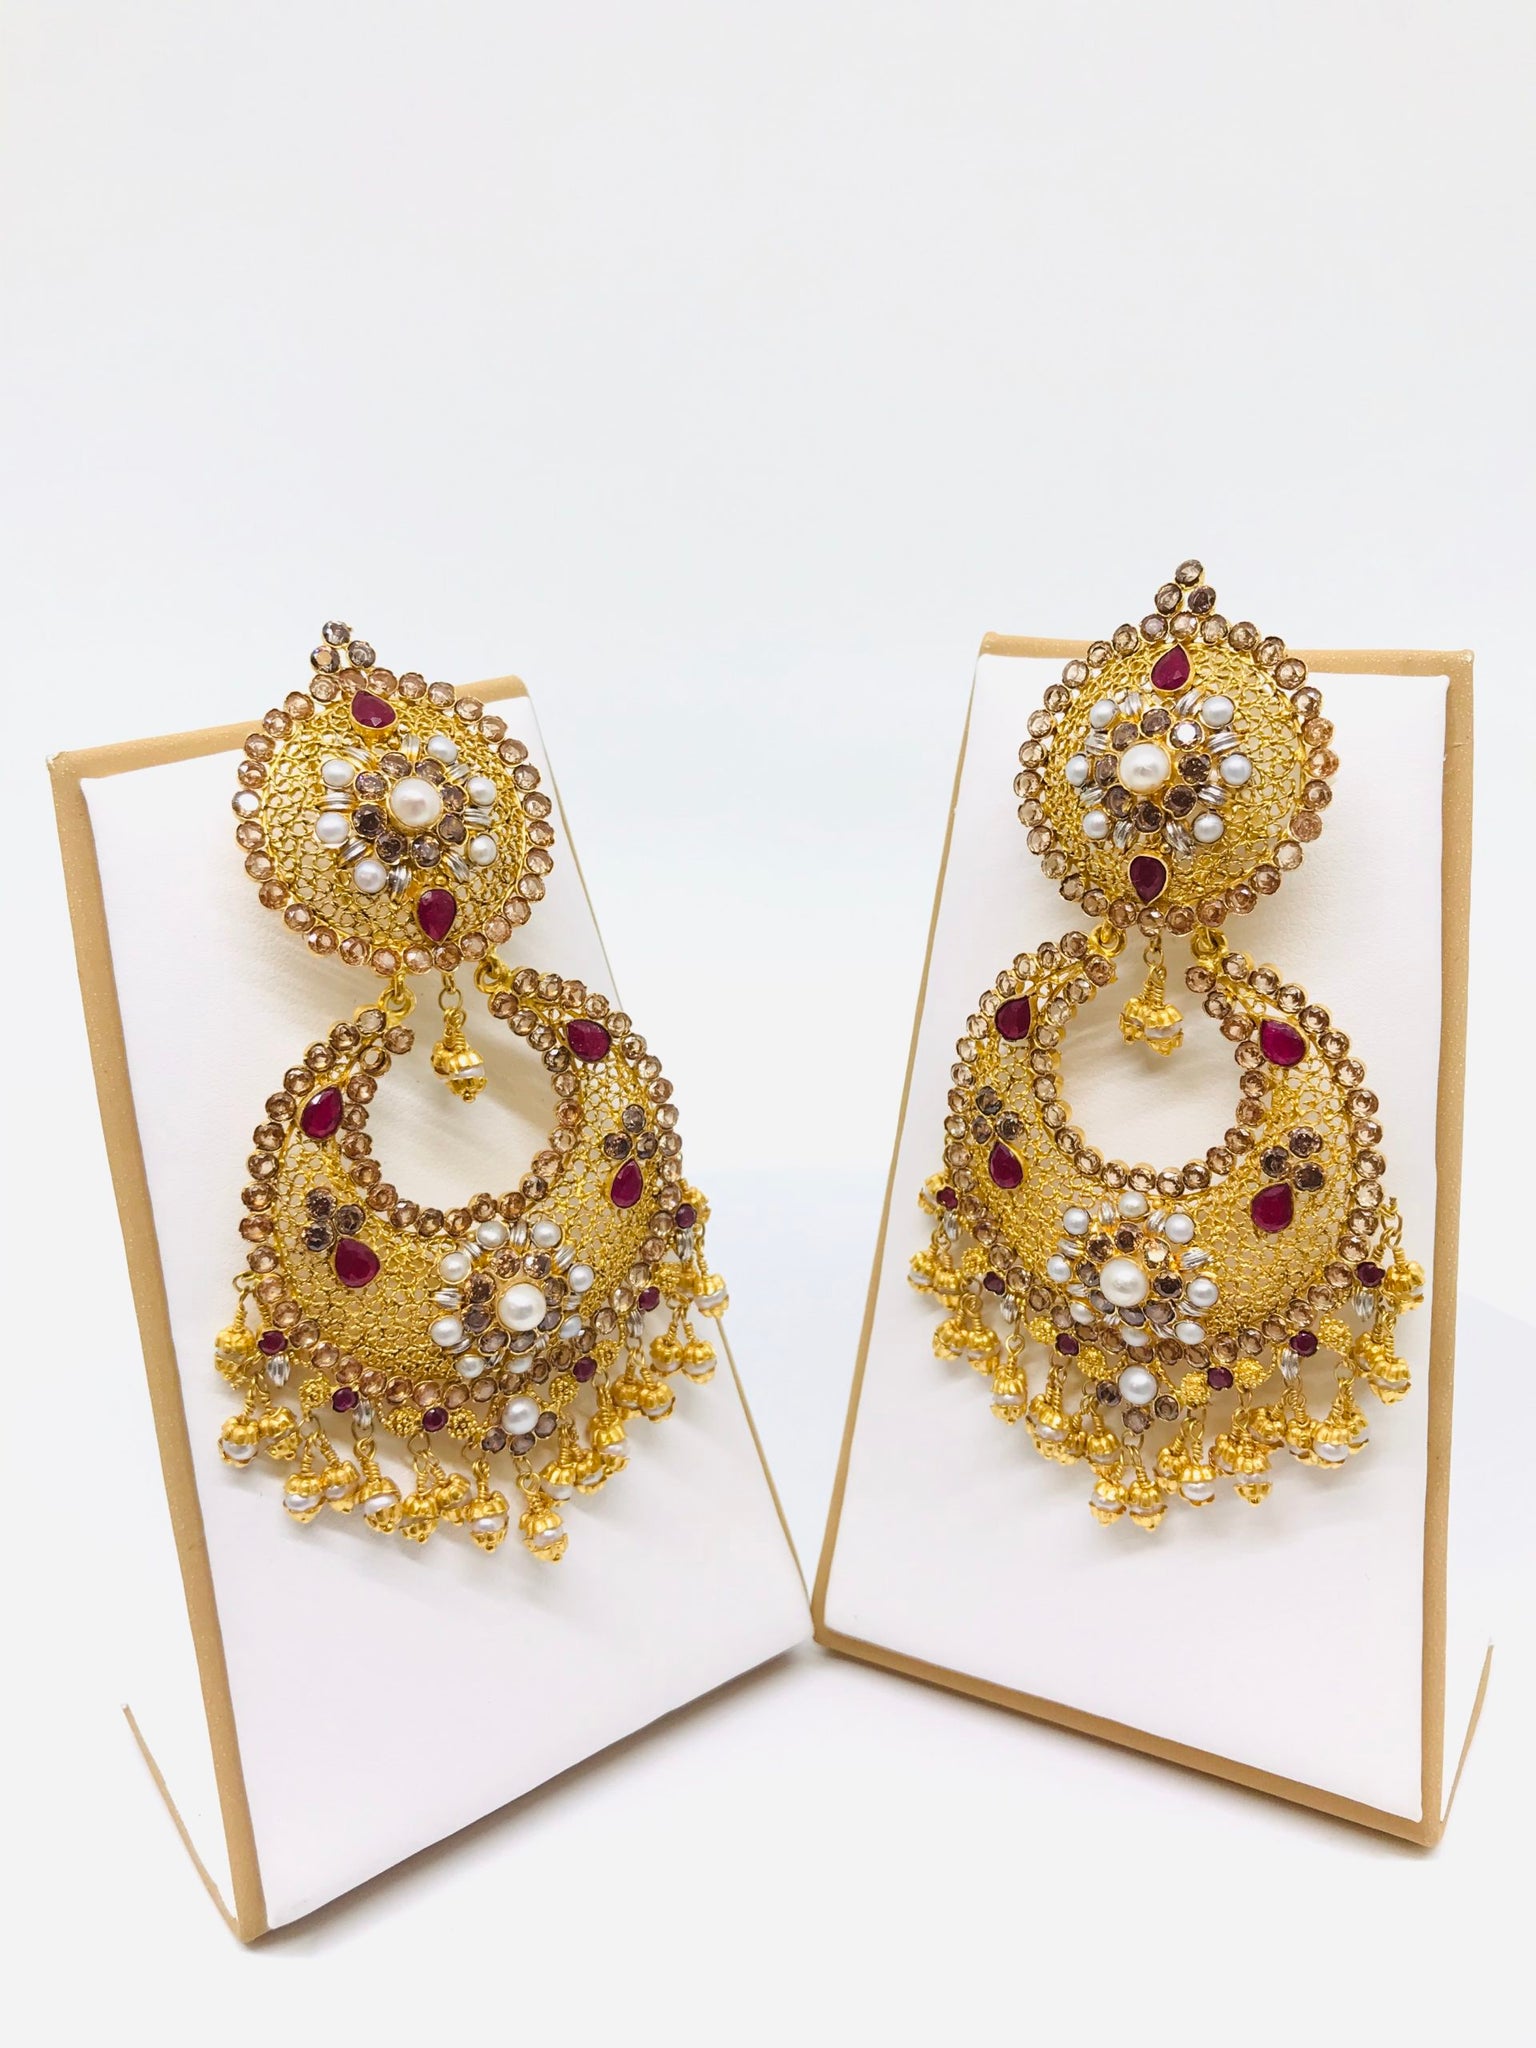 Dubai Gold Earrings Designs 2021 | Latest Gold Earrings Models | Jewellery  Design Images - YouTube